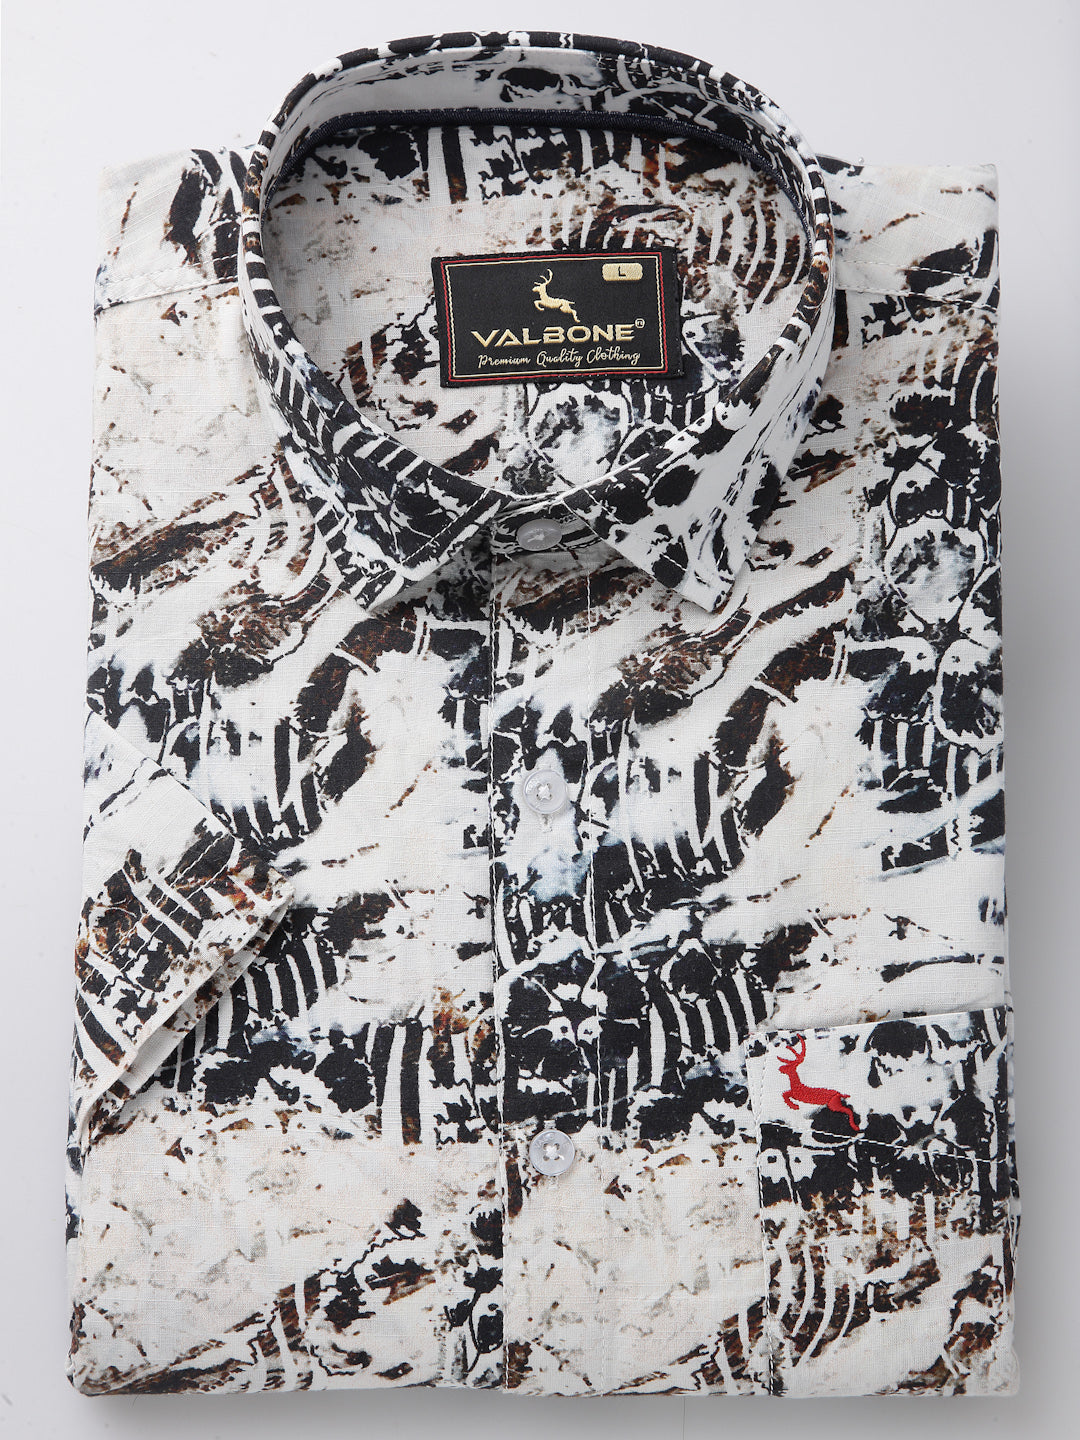 Valbone Men’s Black Digital Print Regular Fit Casual Shirt Half Sleeves